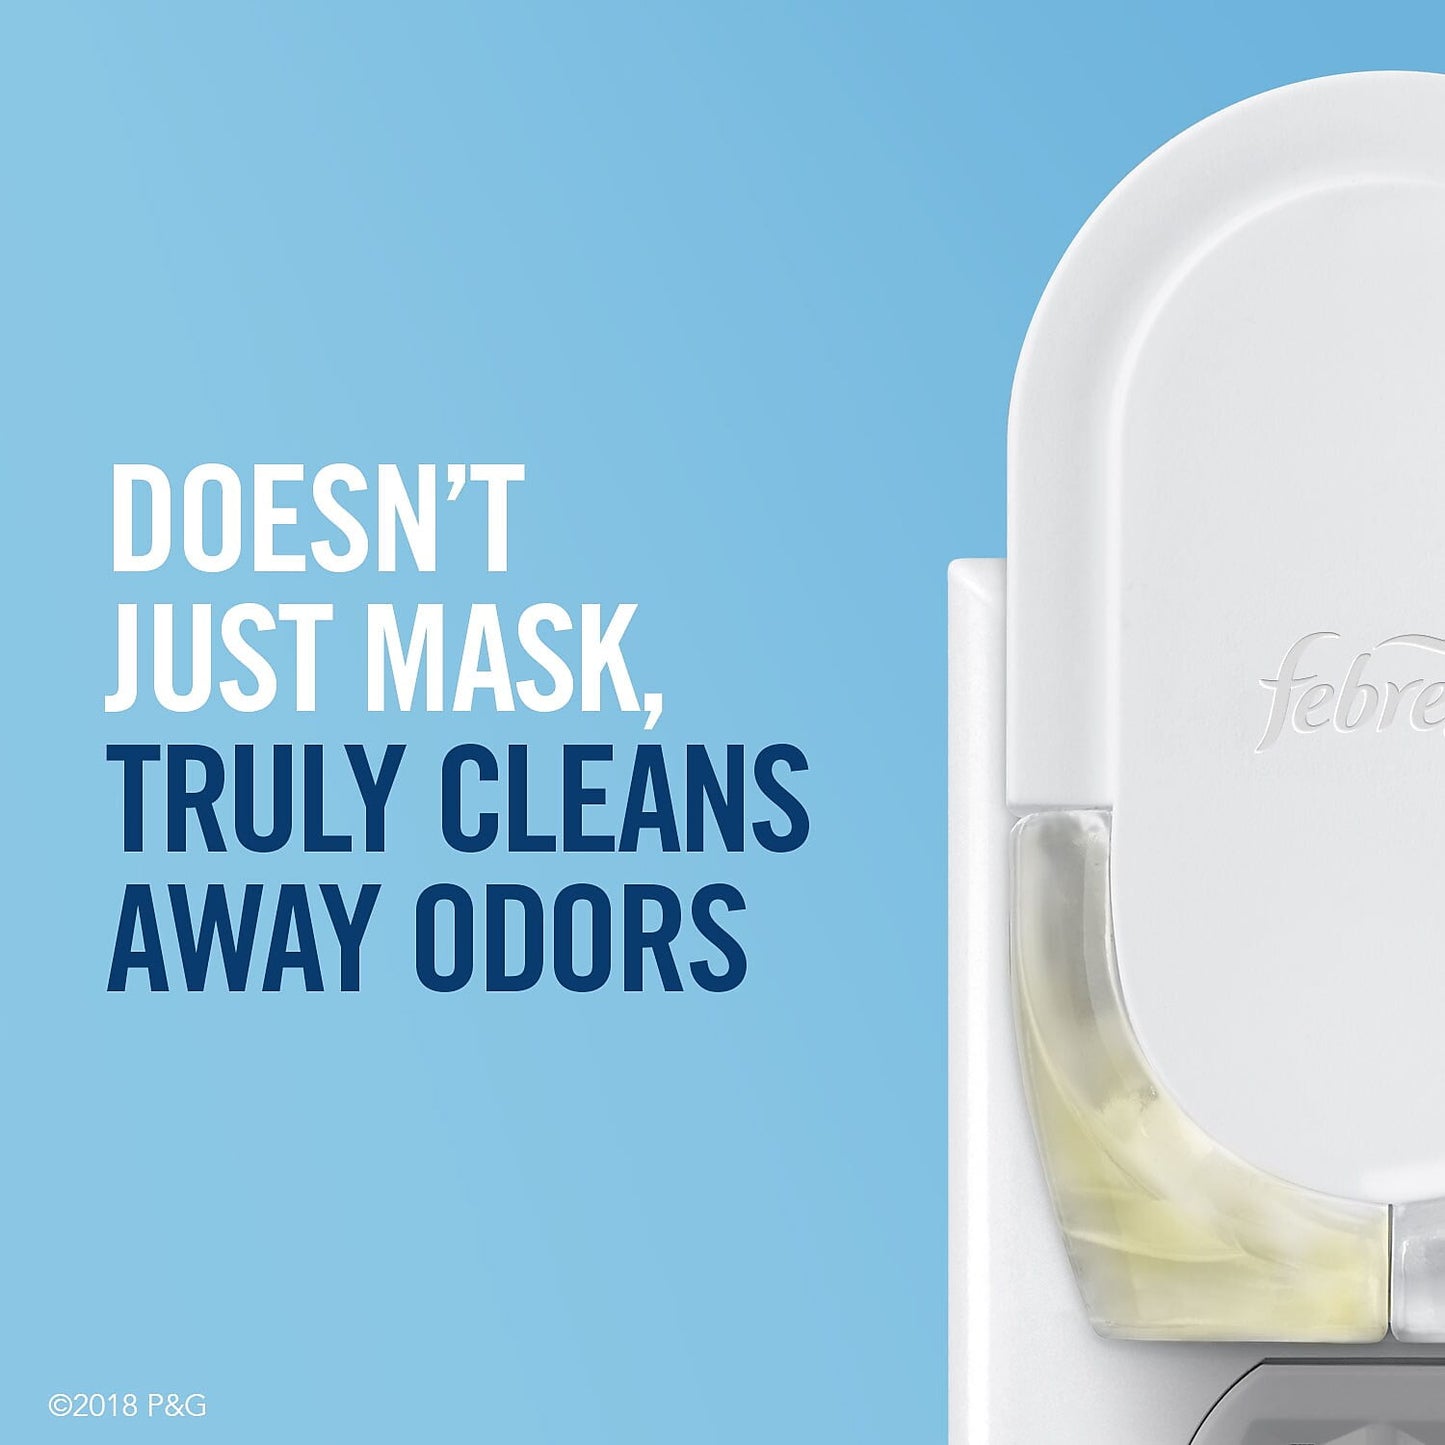 Febreze Odor-Fighting Fade Defy Plug Air Freshener Warmer Device, 1 Count, Fresh